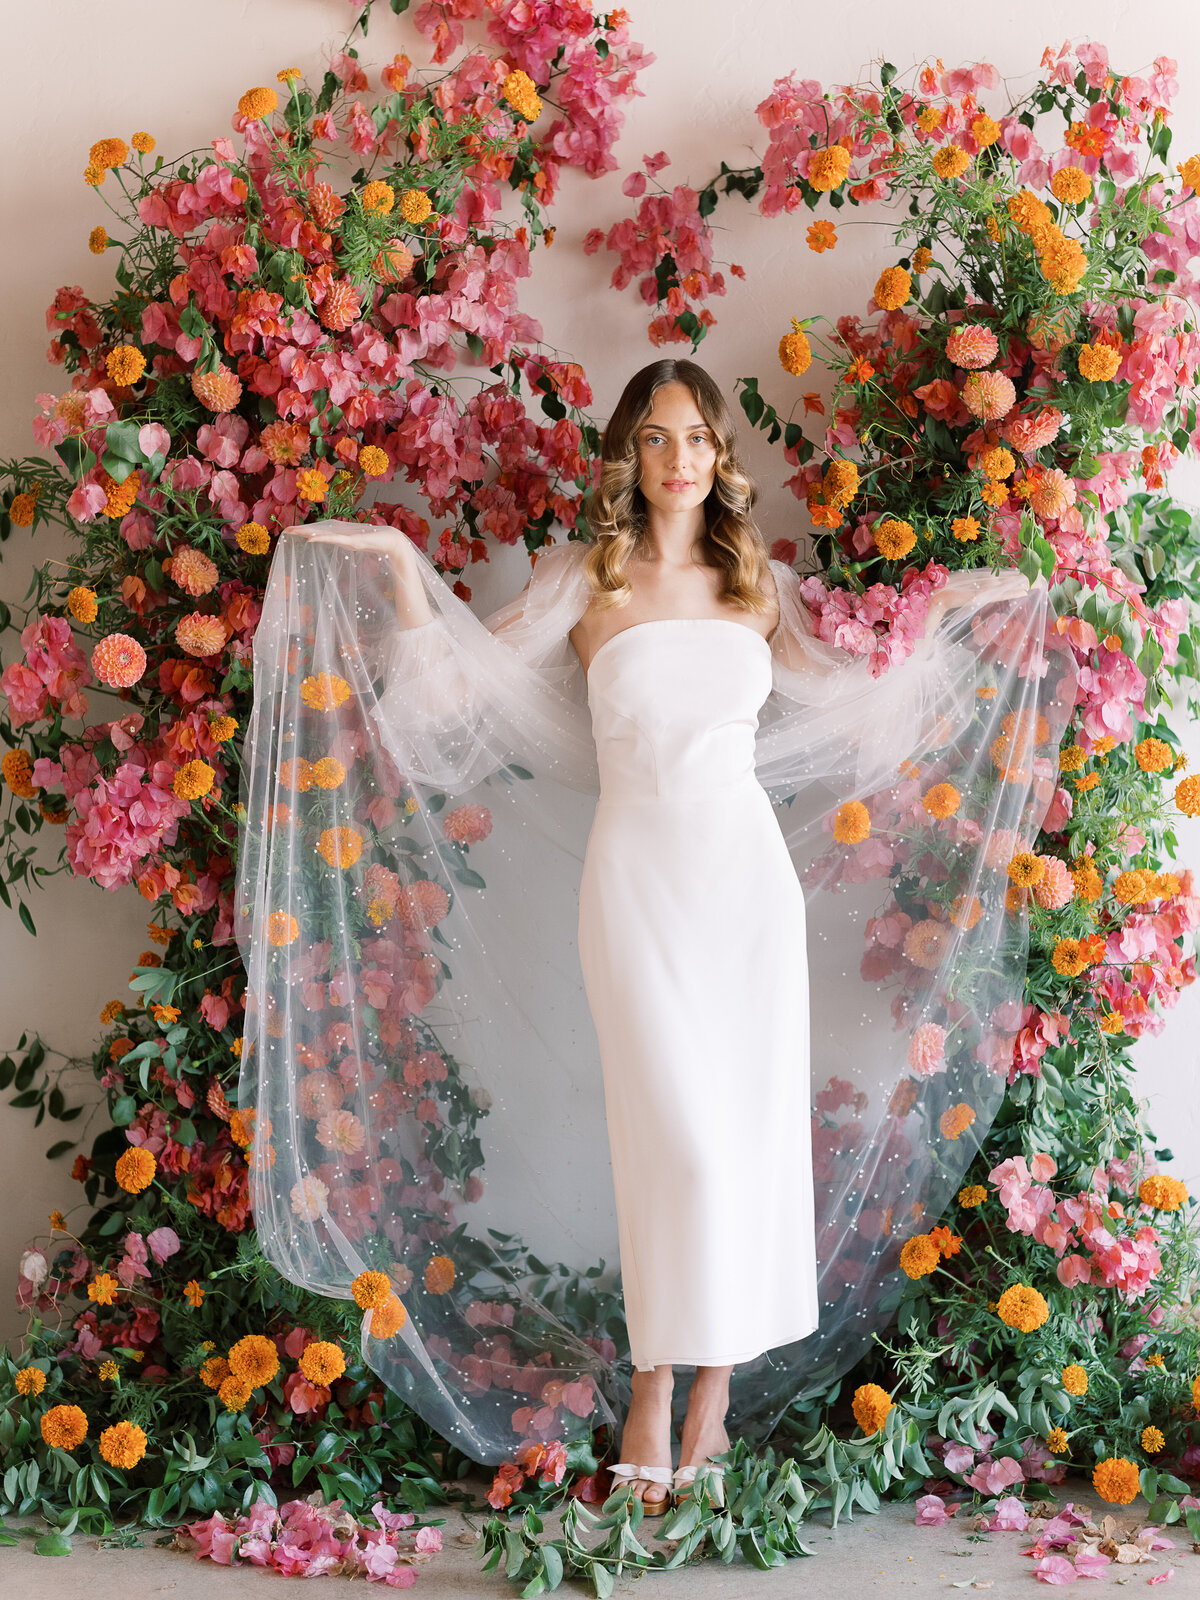 Sarah Rae Floral Designs Wedding Event Florist Flowers Kentucky Chic Whimsical Romantic Weddings24